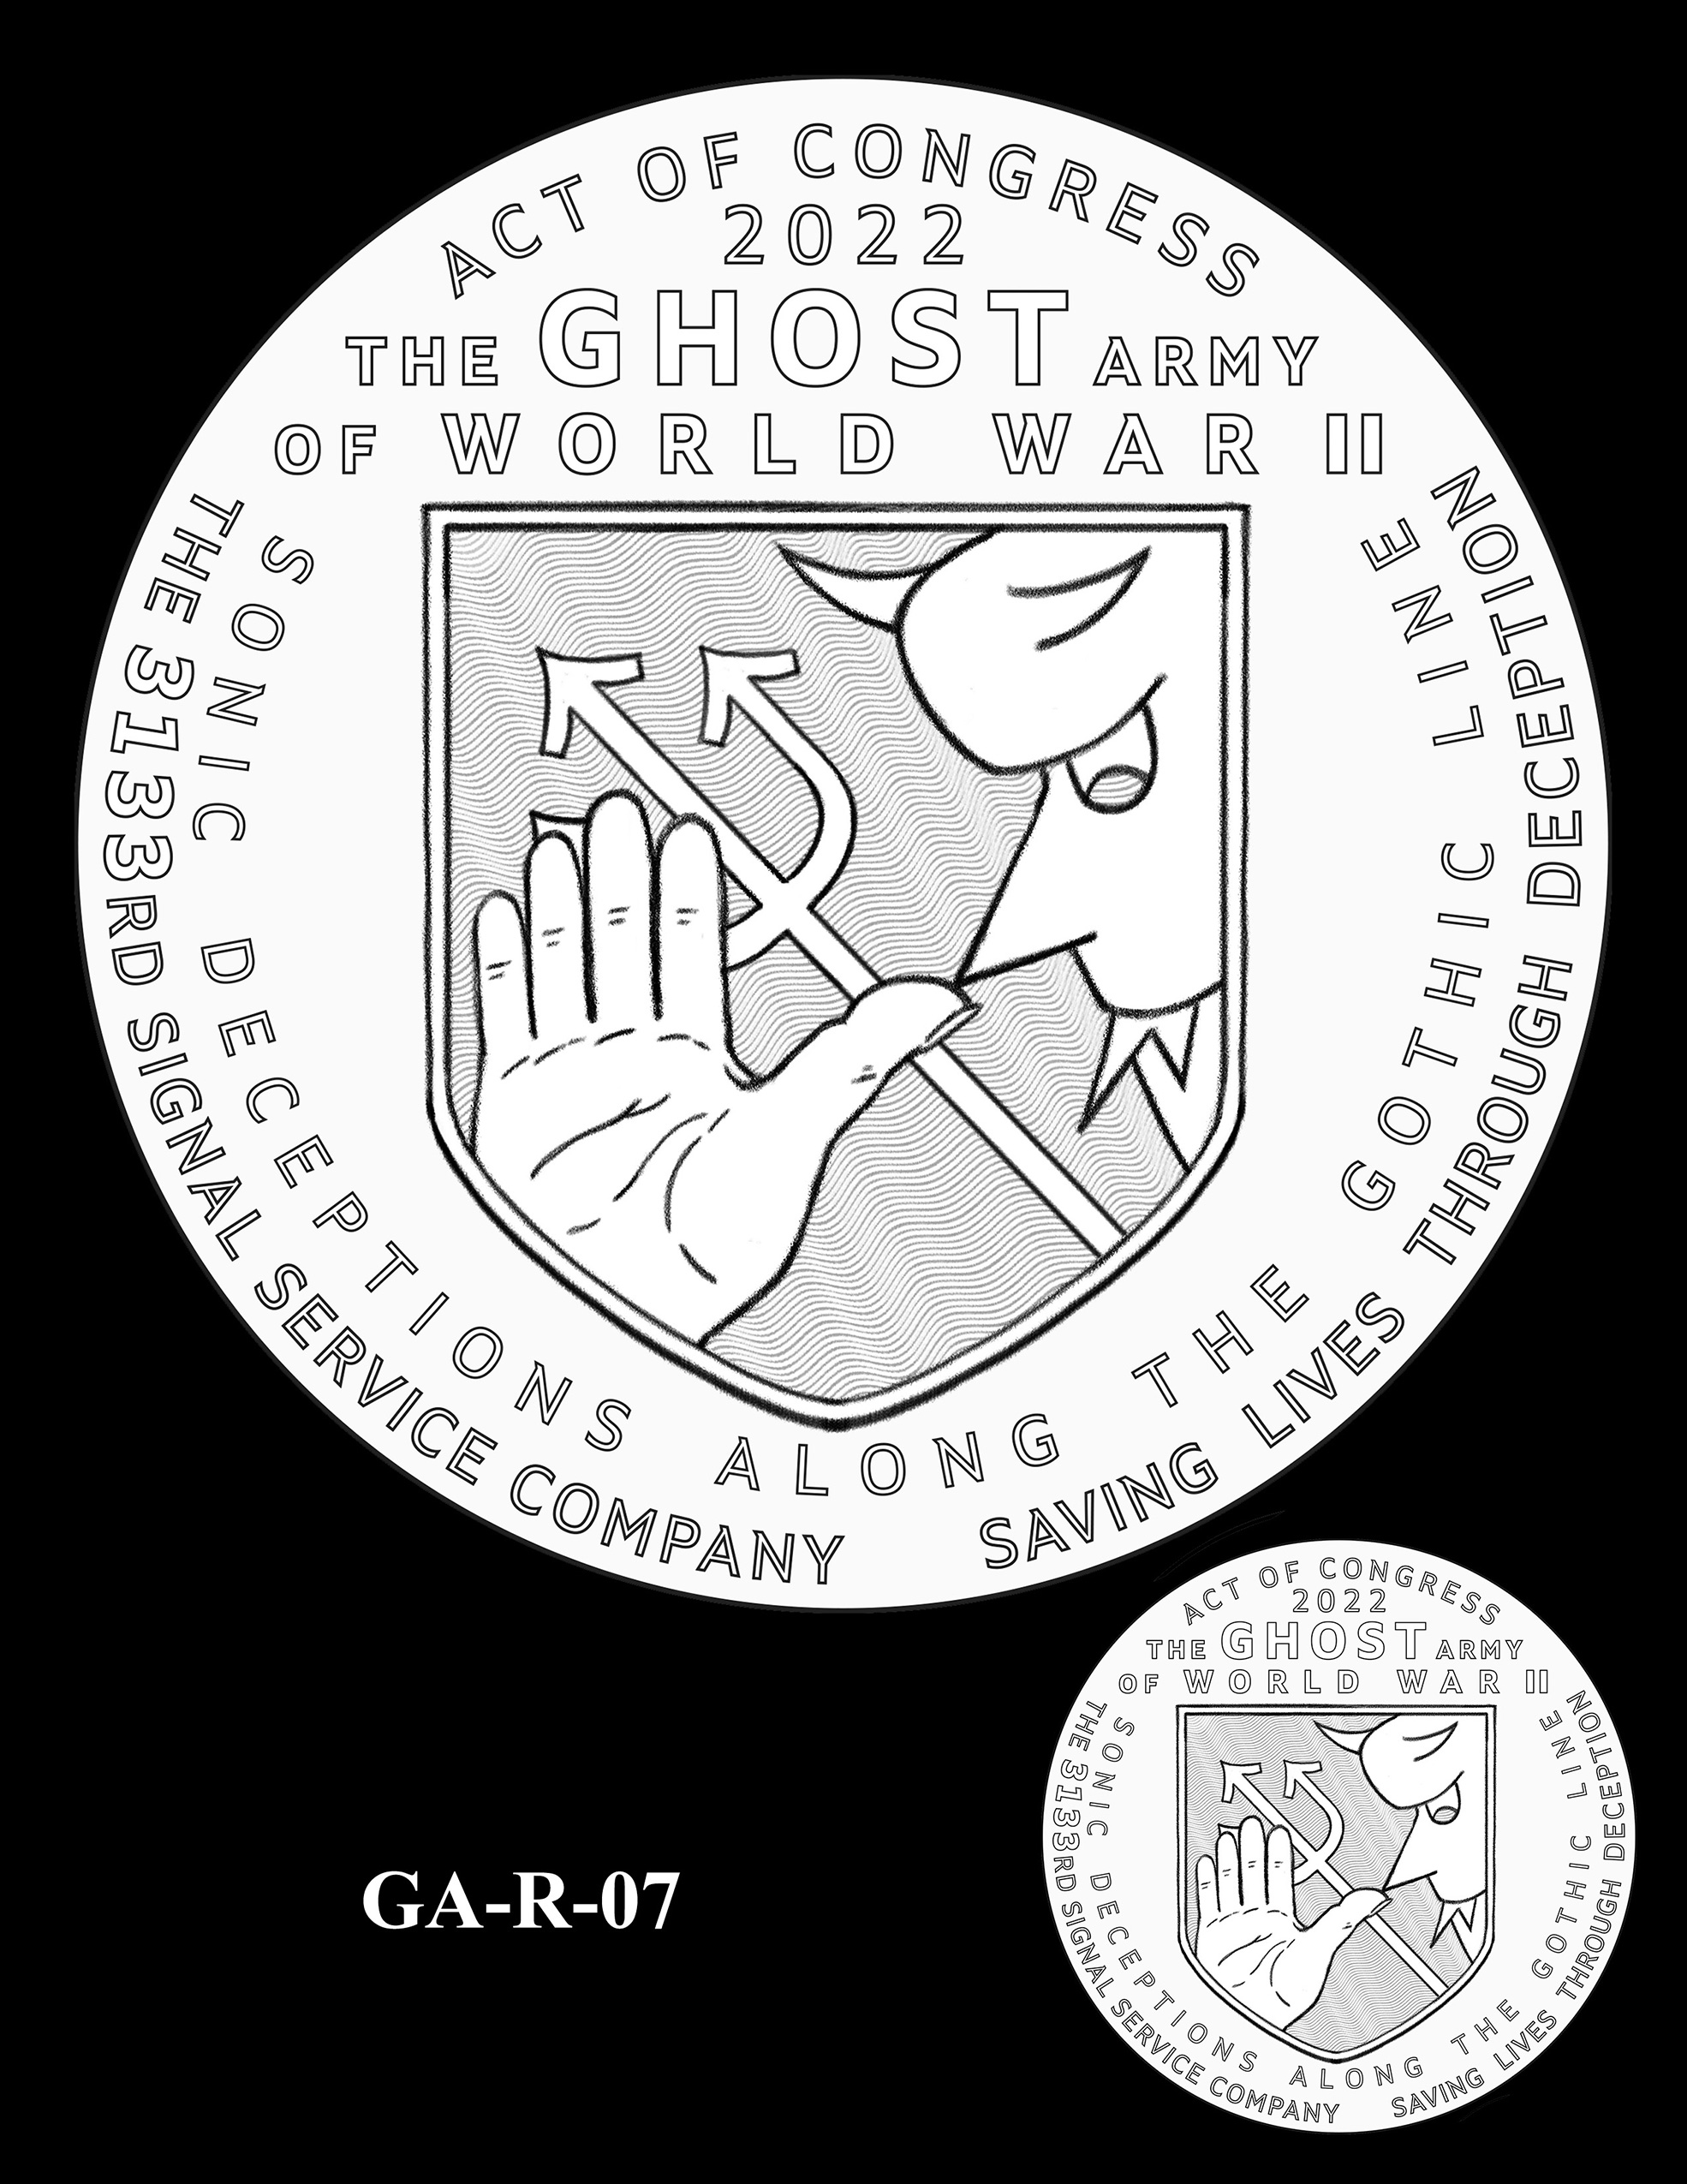 GA-R-07 -- Ghost Army Congressional Gold Medal